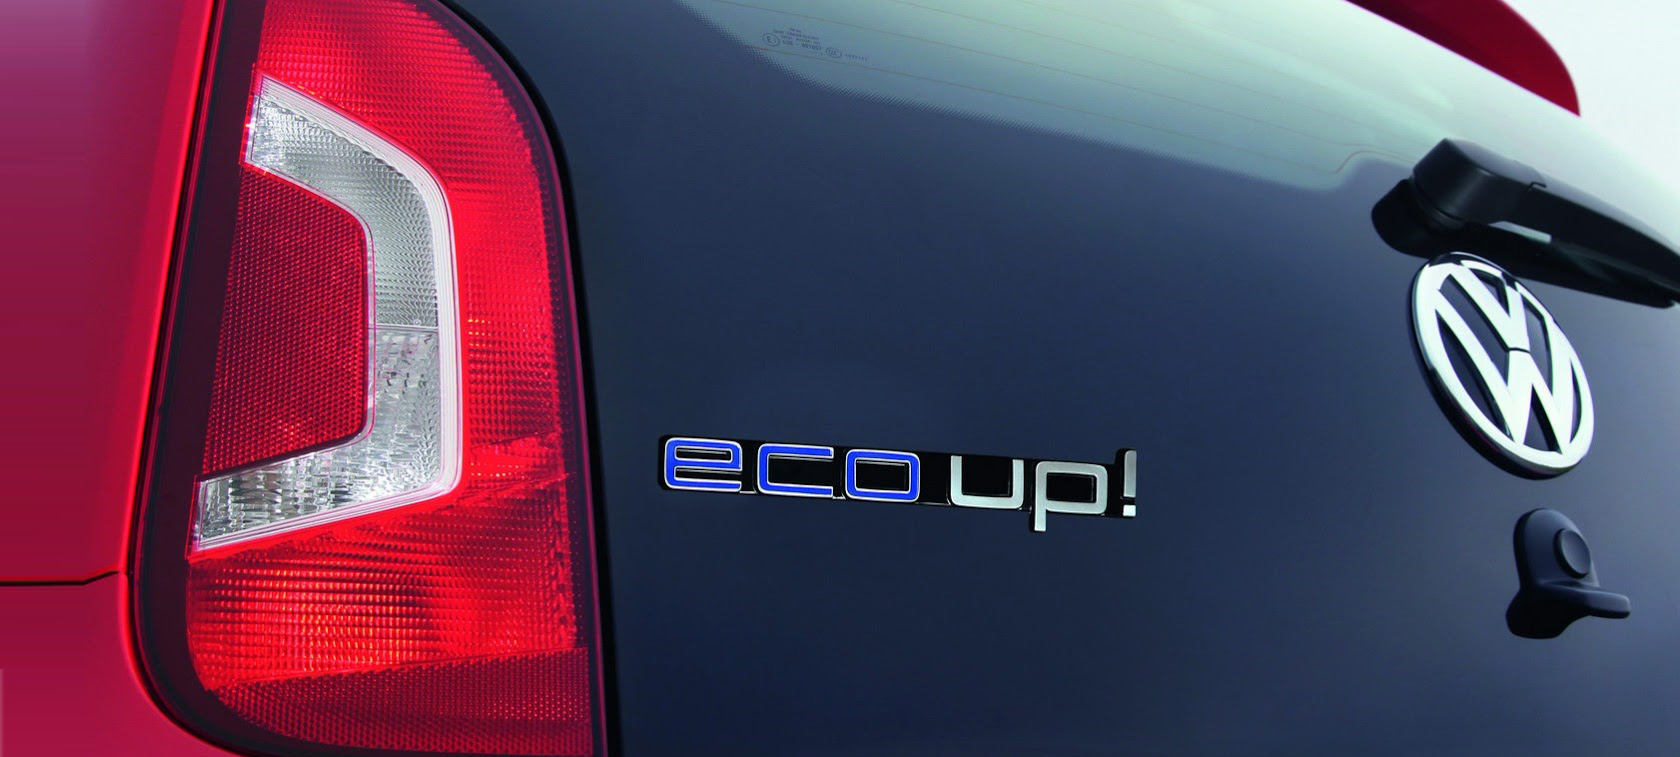 Volkswagen Eco up! - magia liczb